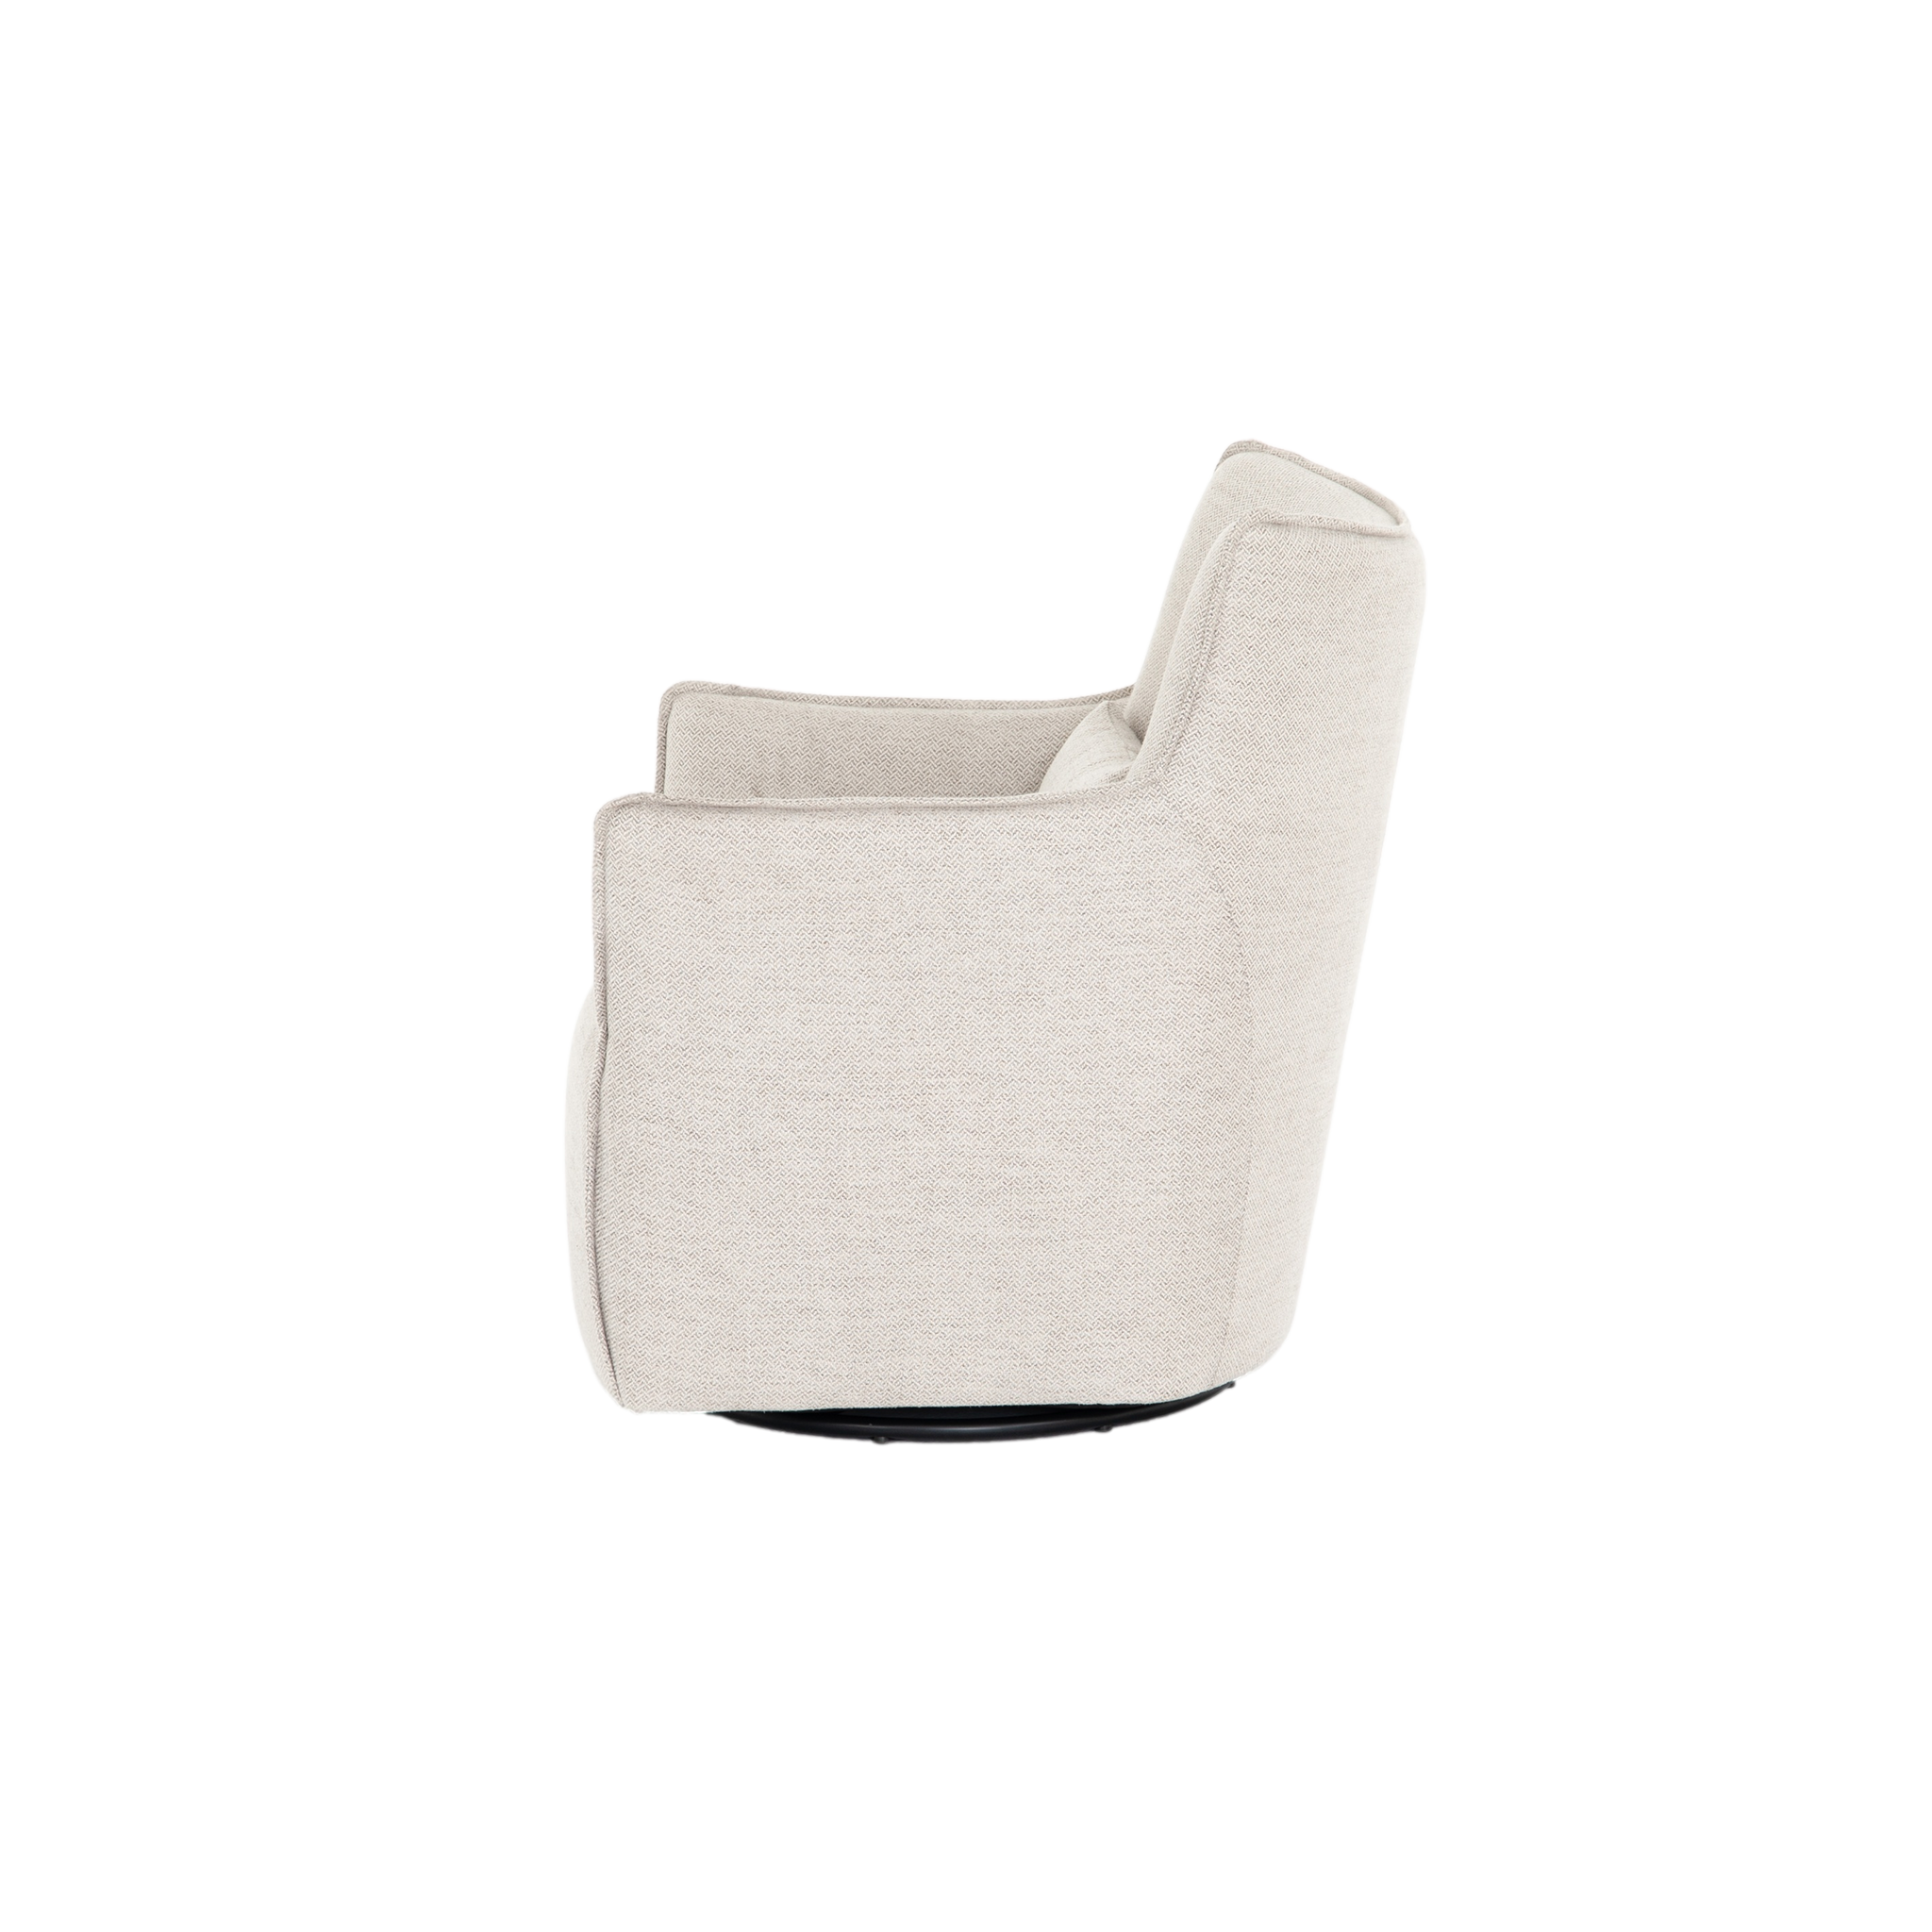 Kimble Swivel Chair in Noble Platinum